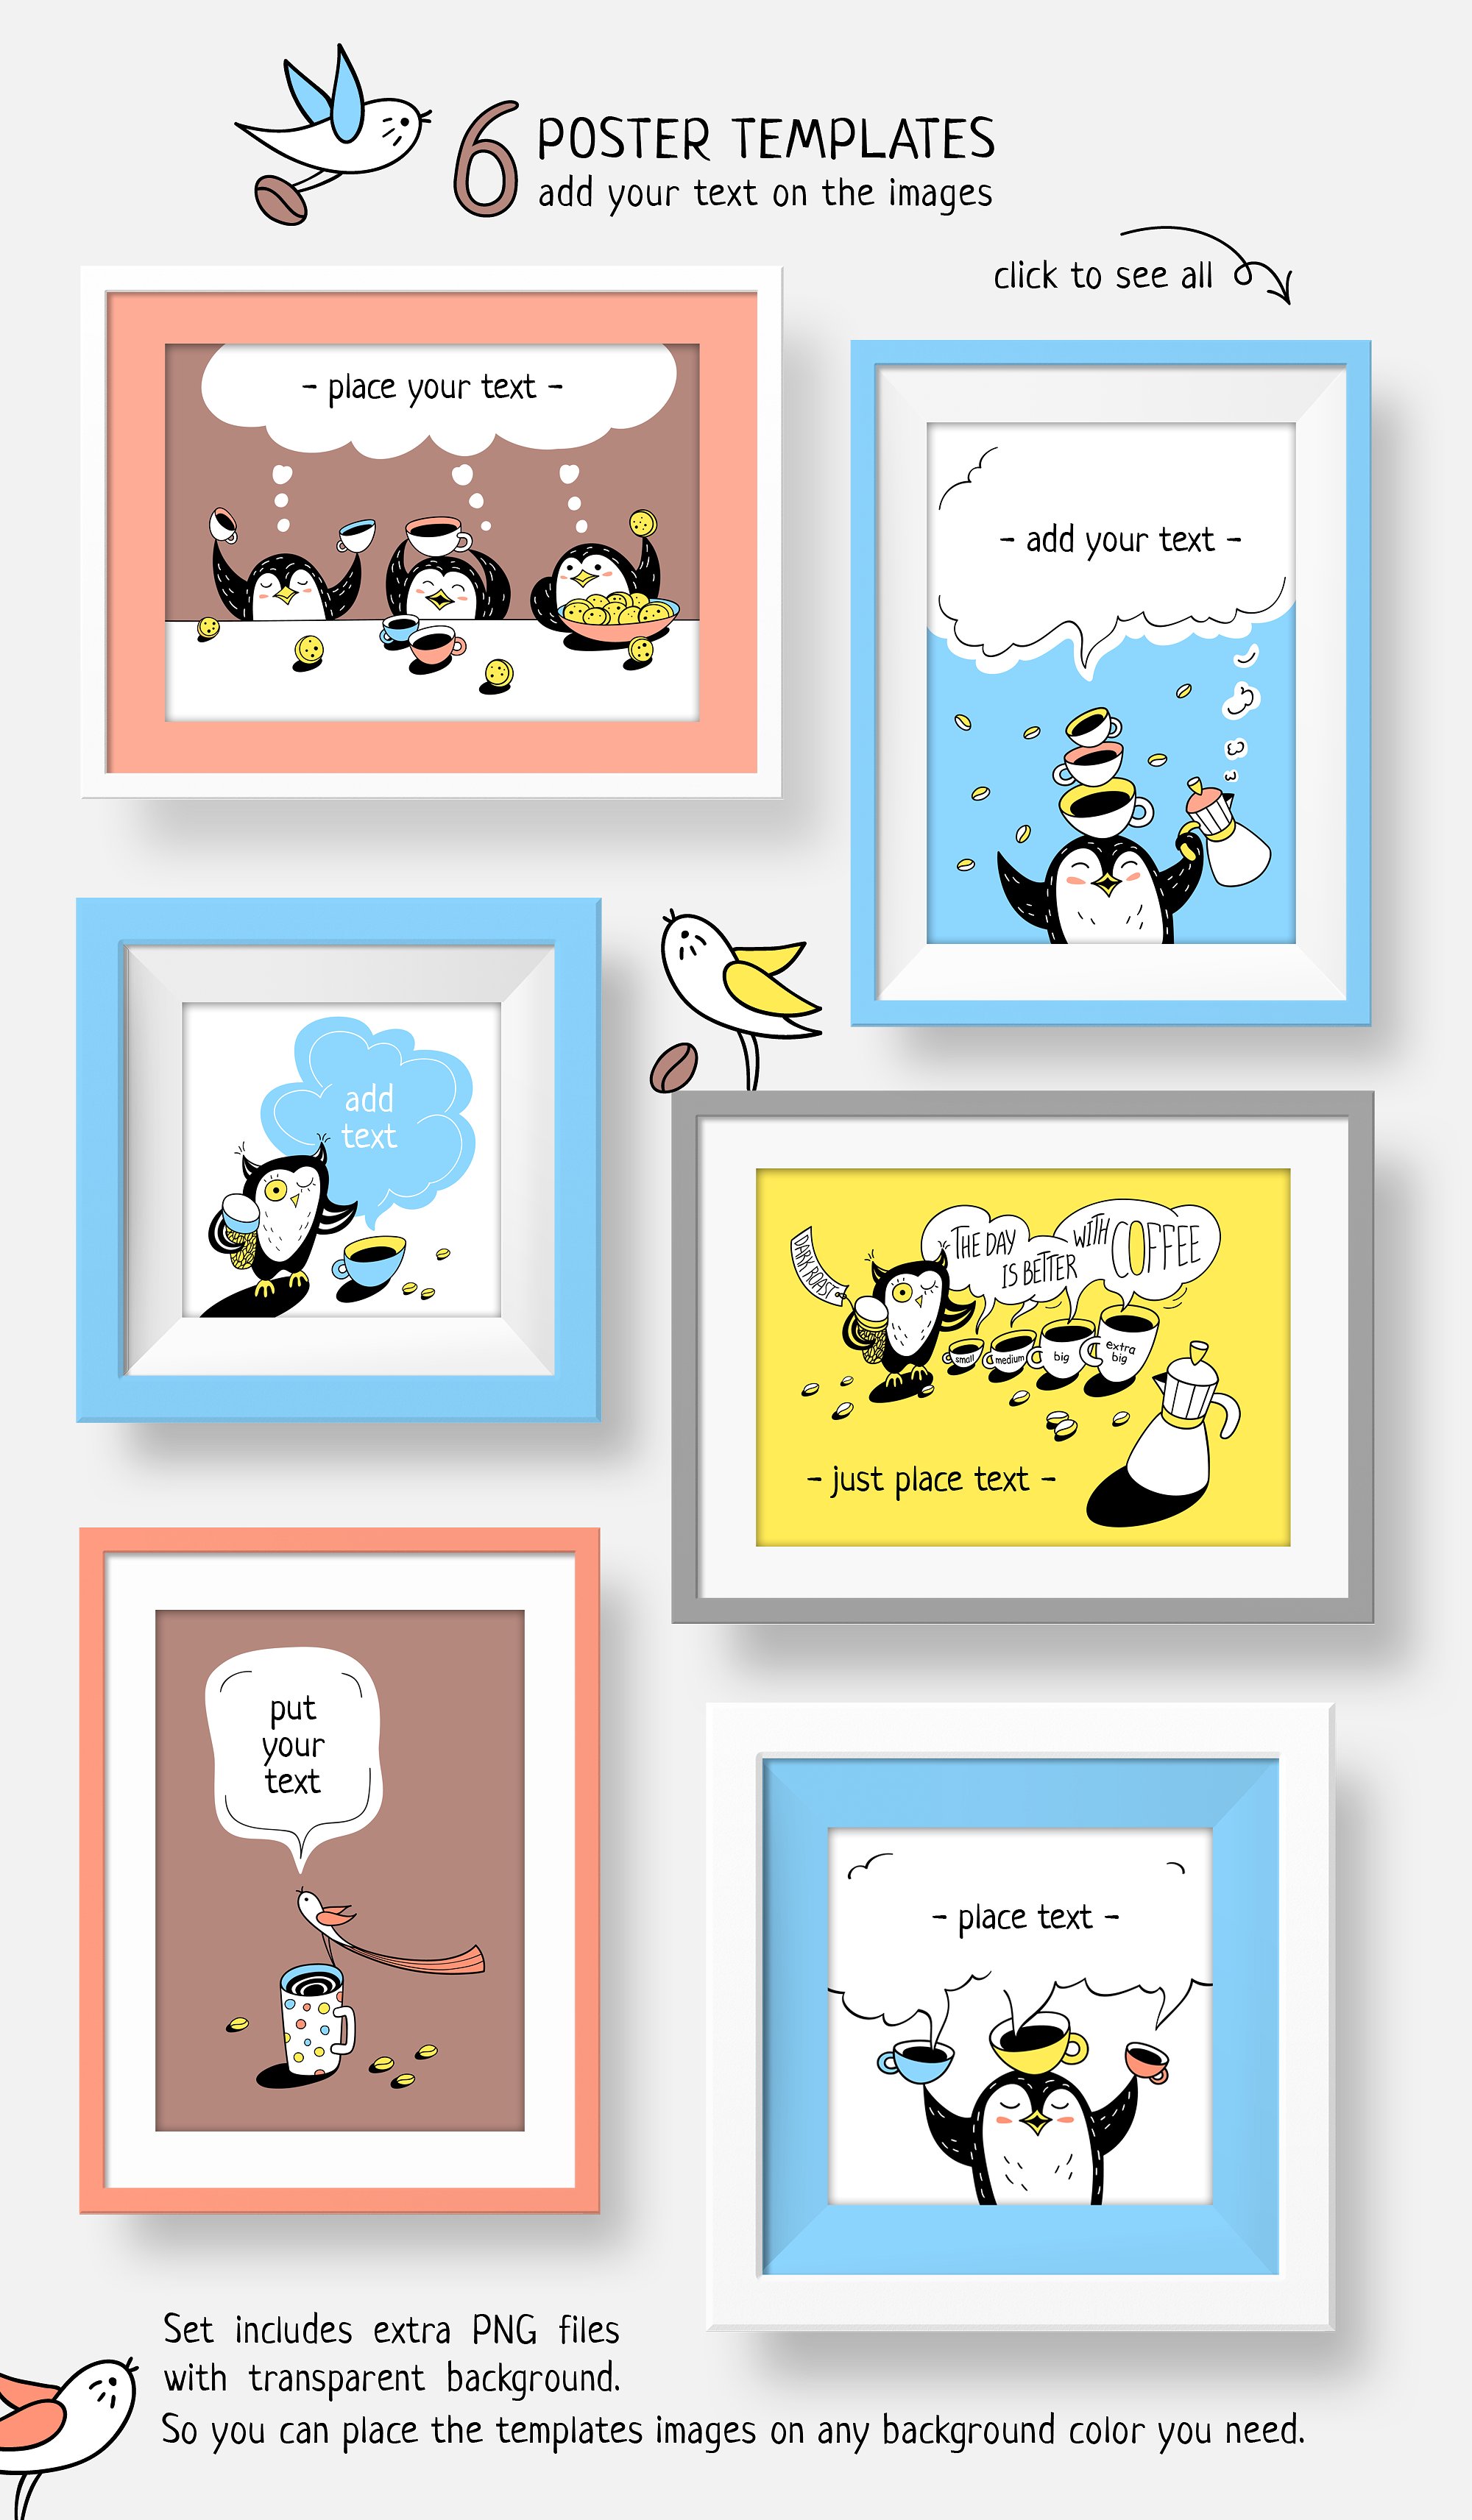 EVERY EARLY BIRD NEEDS COFFEE-手绘卡通咖啡插图素材下载[eps,png]插图10